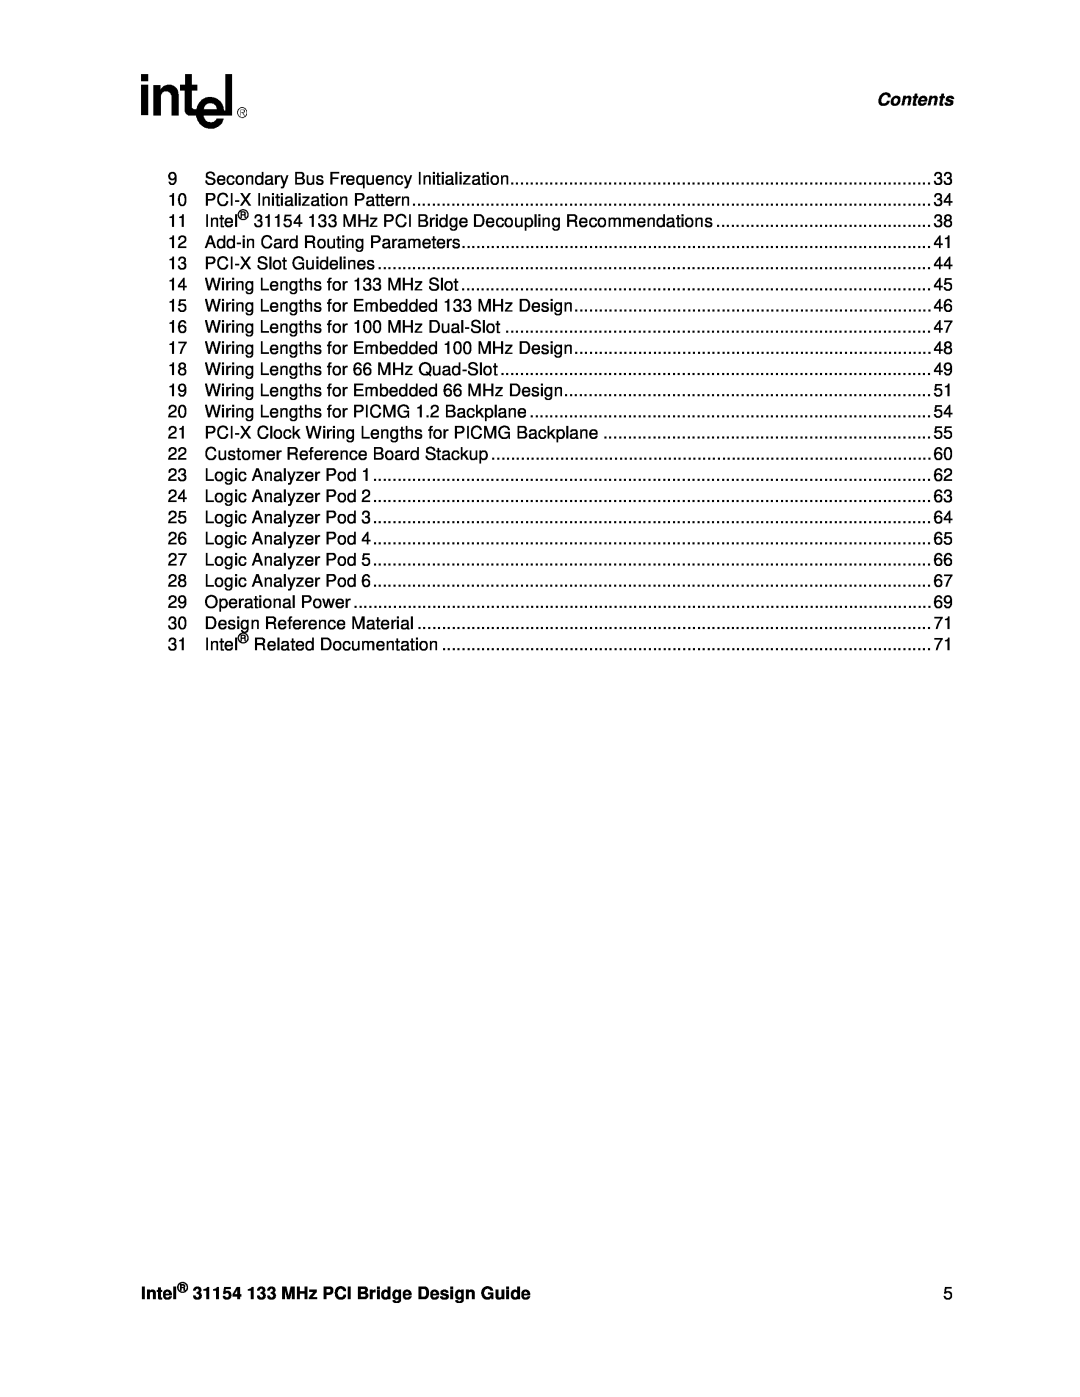 Intel manual Contents, Intel 31154 133 MHz PCI Bridge Design Guide 